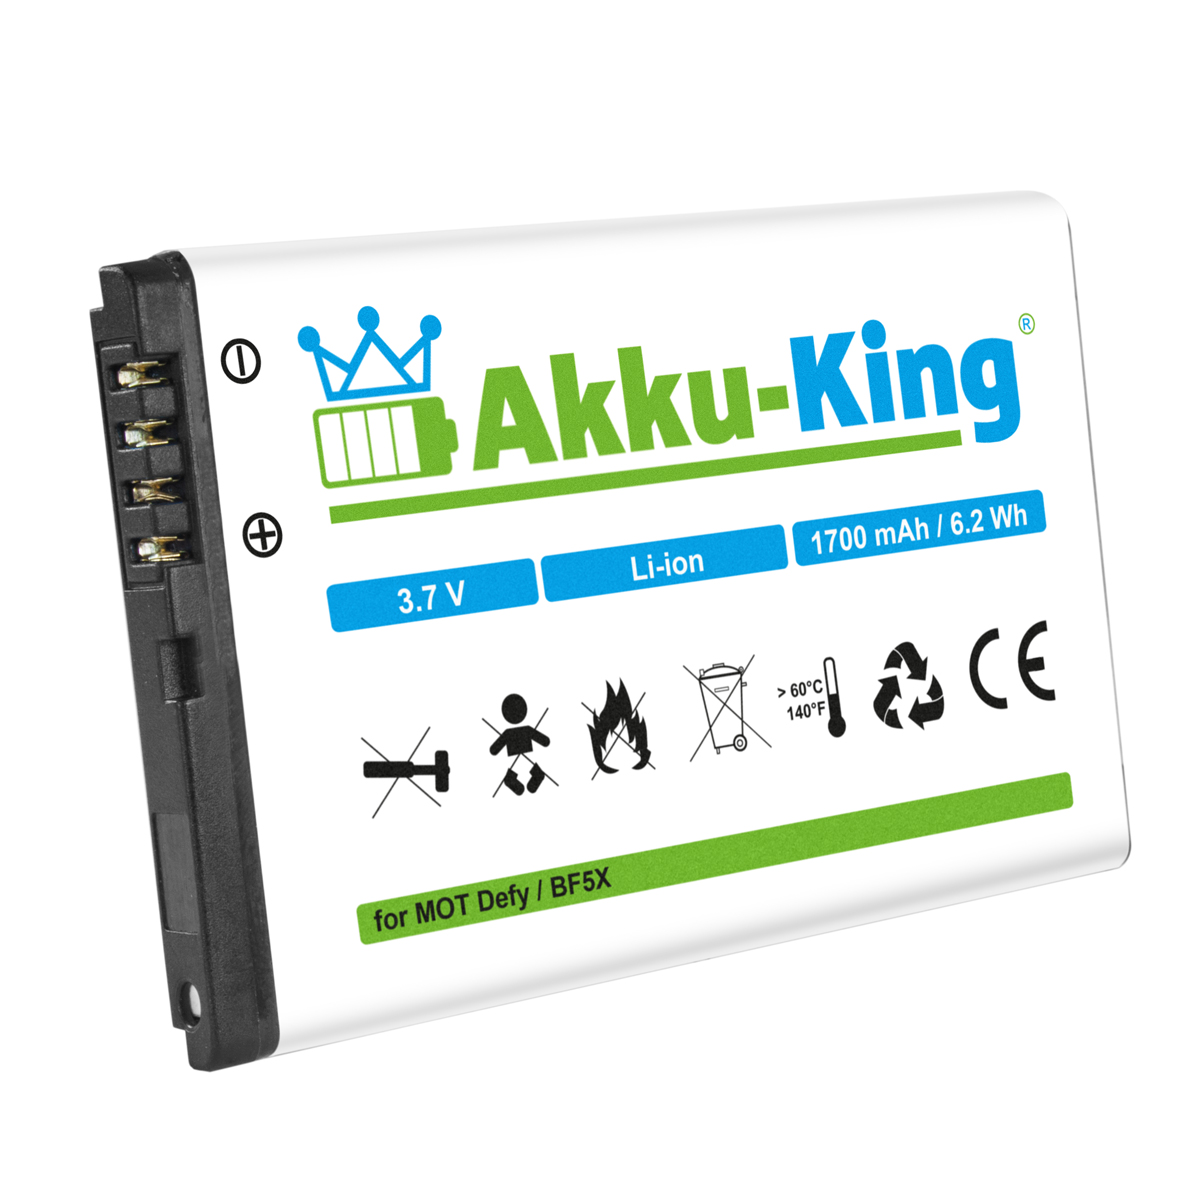 kompatibel mit 1700mAh SNN5877A Motorola 3.7 Li-Ion Handy-Akku, AKKU-KING Akku Volt,